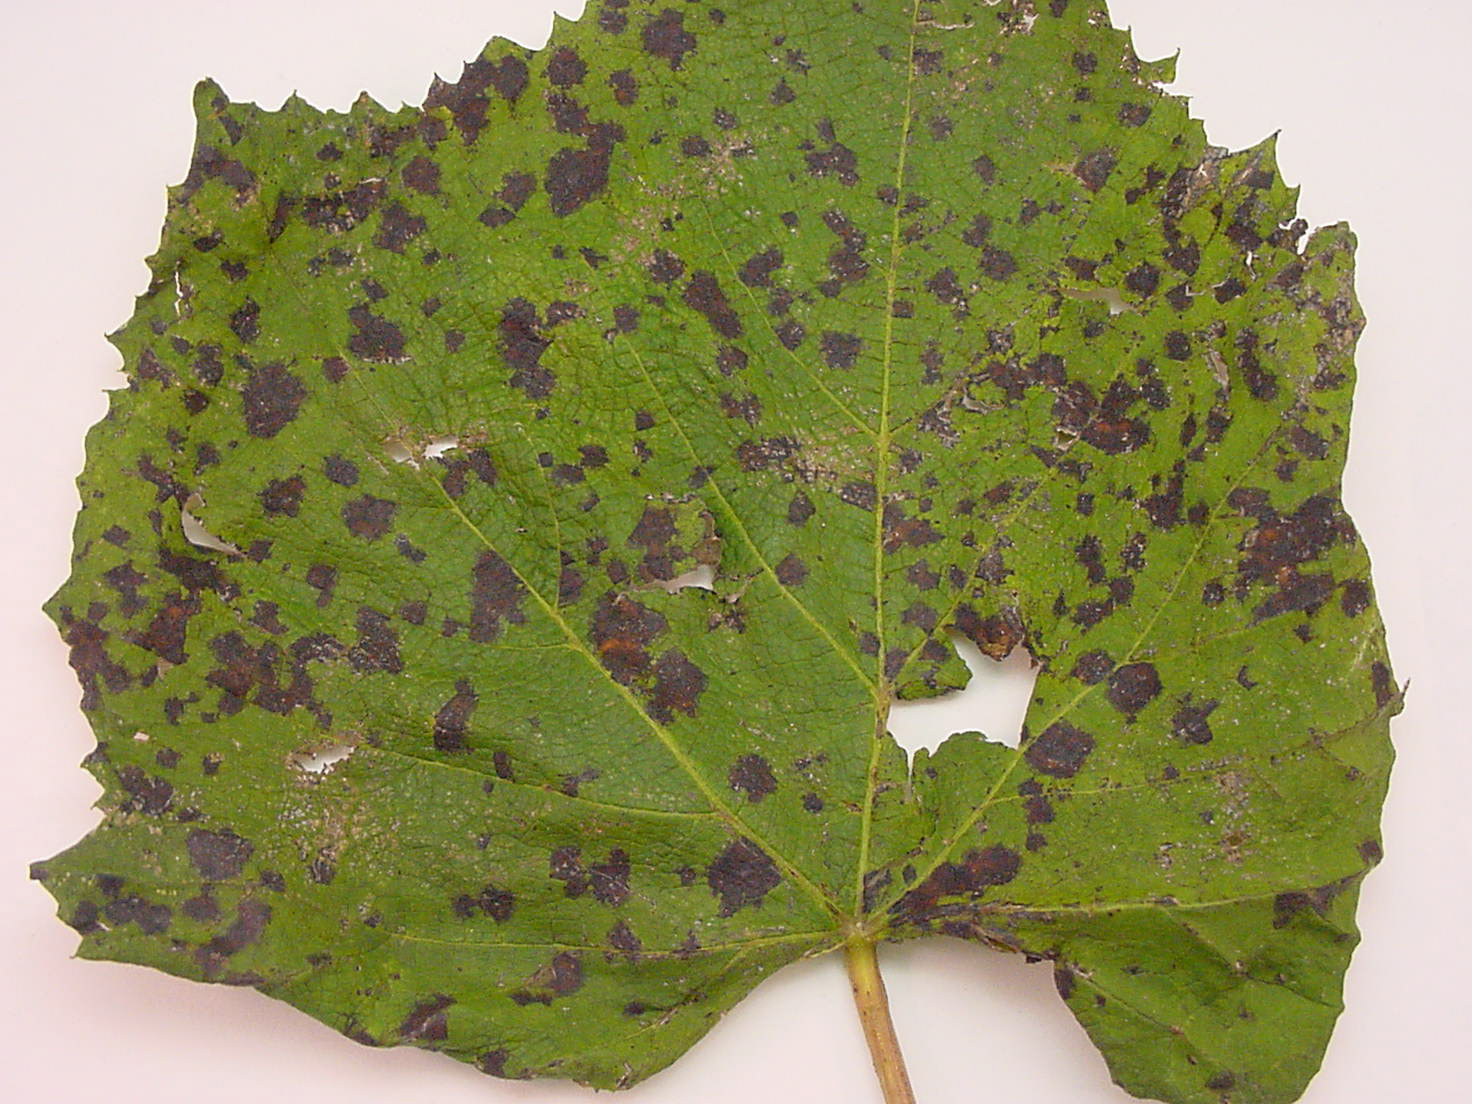 Pseudocercospora leaf spot. 